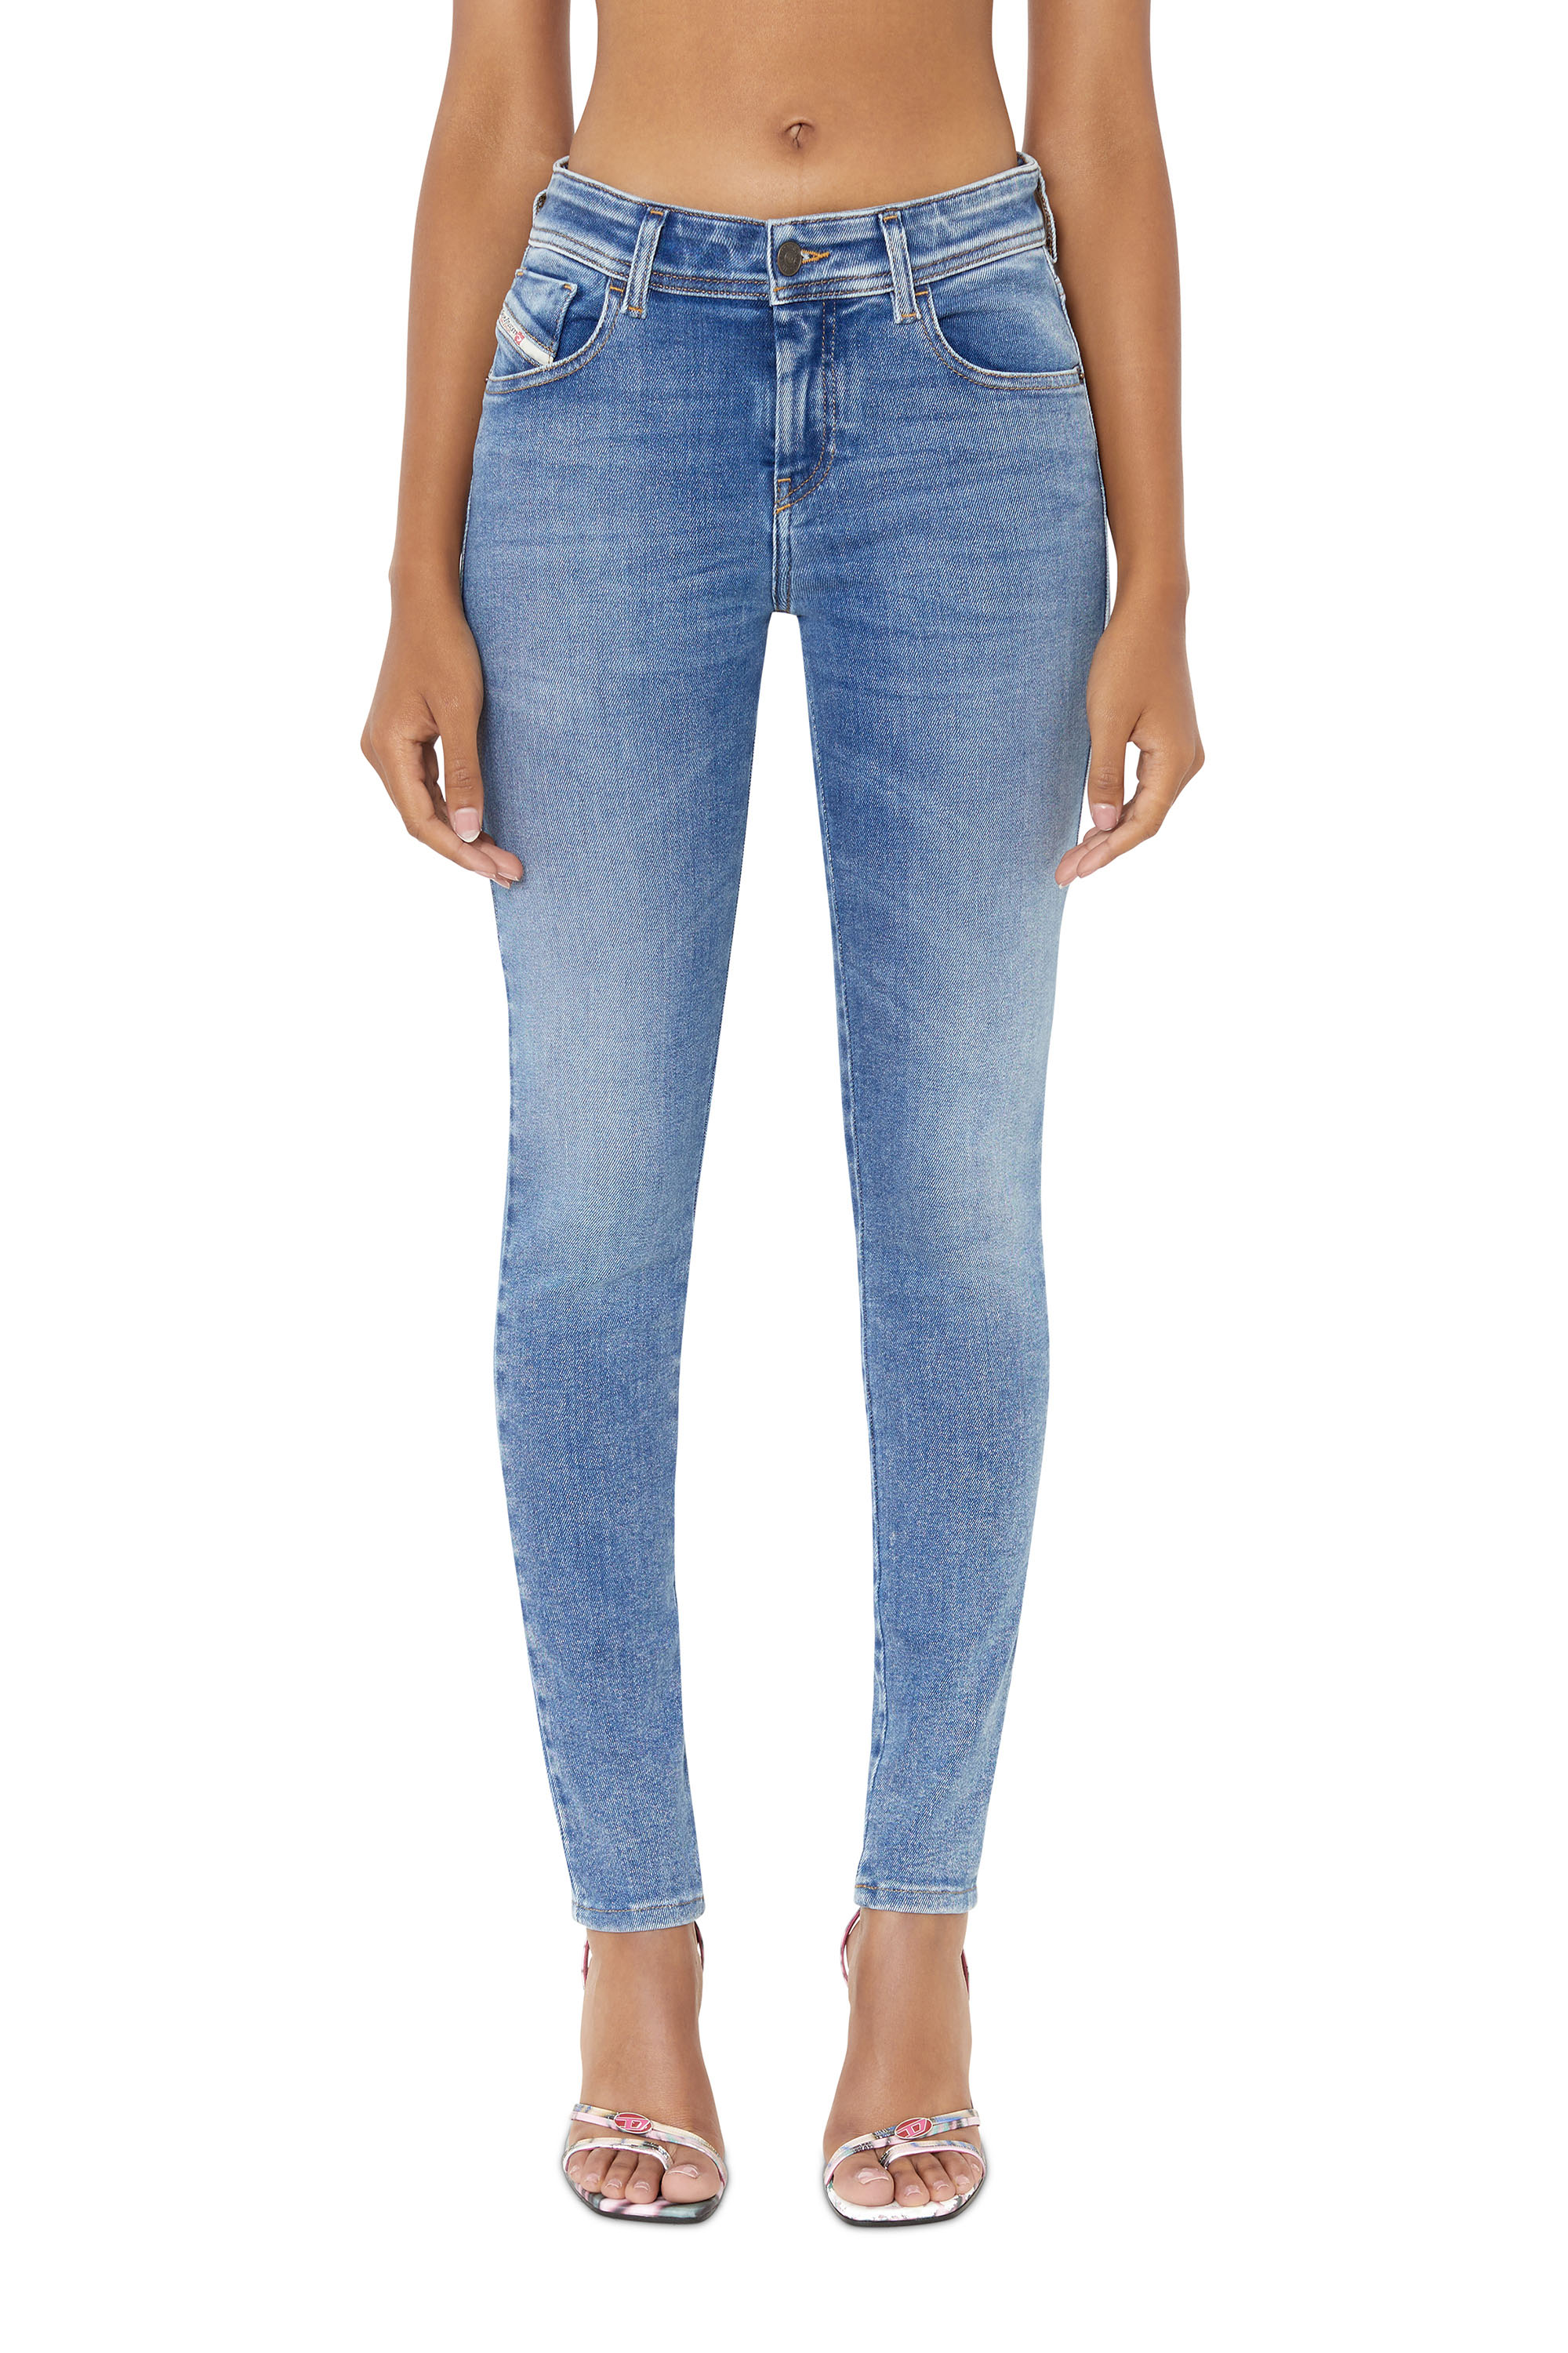 Super skinny Jeans 2017 Slandy 09D62, Medium blue - Jeans